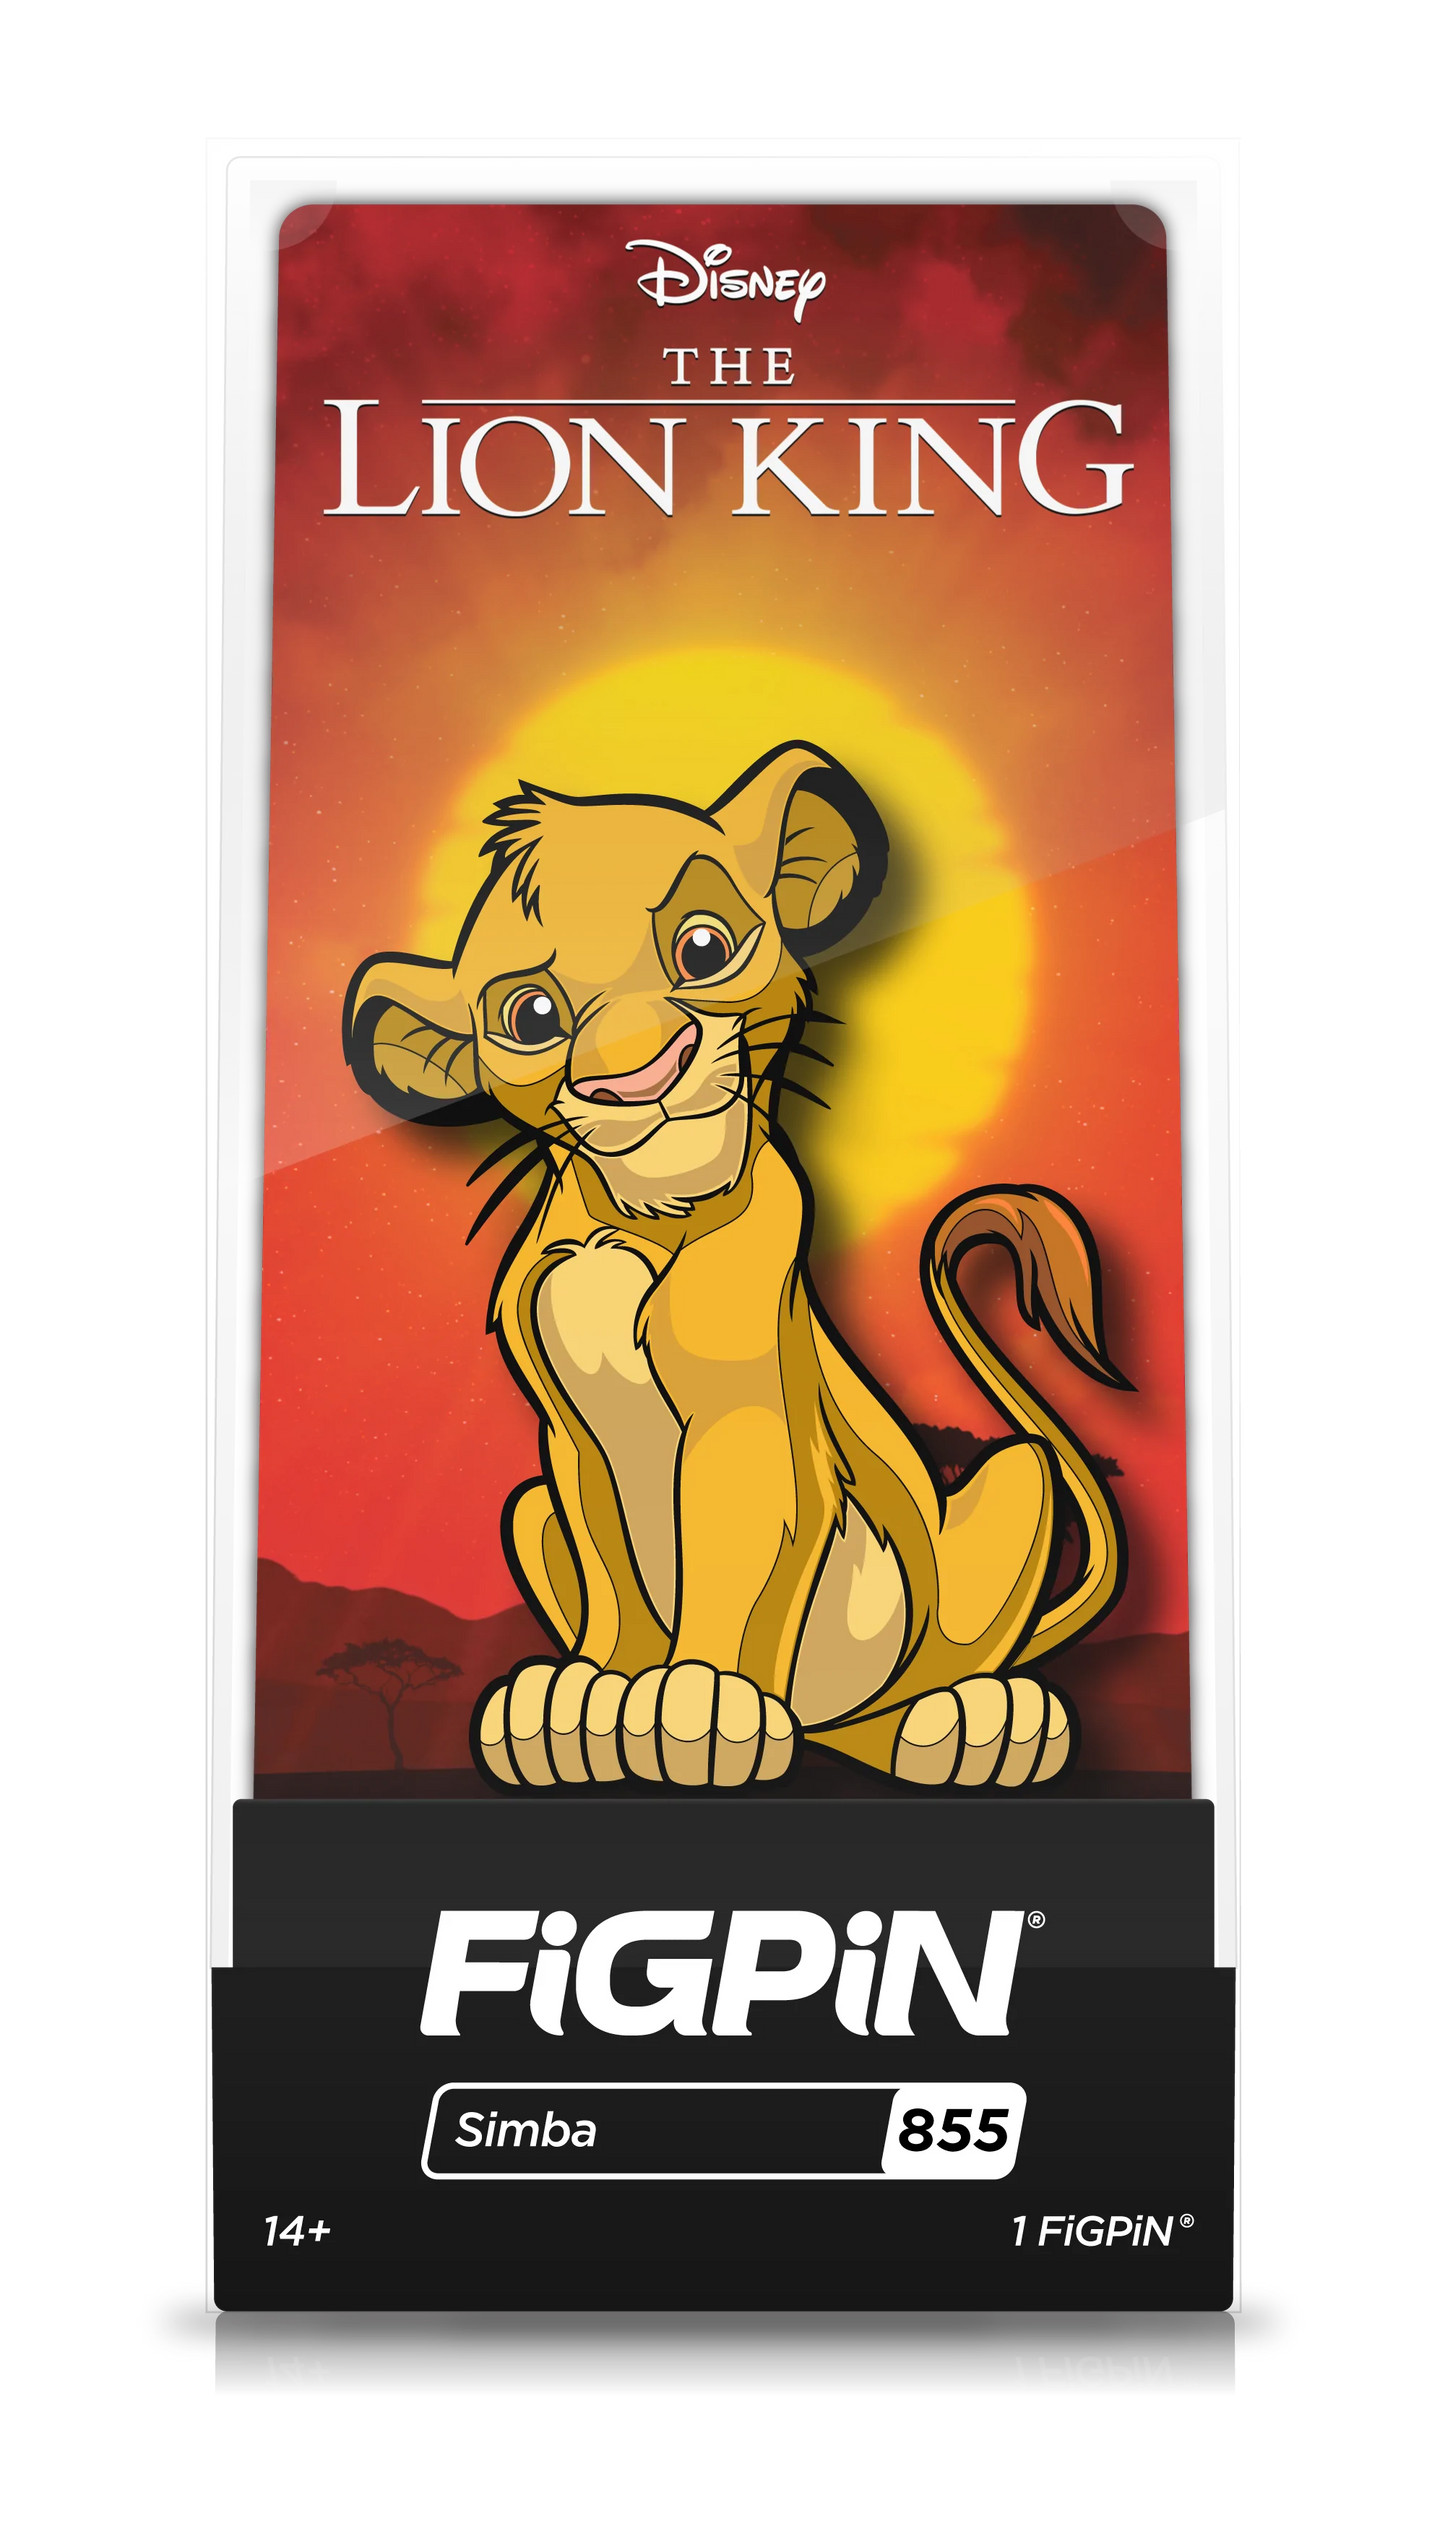 FiGPiN Simba (855) Property: The Lion King